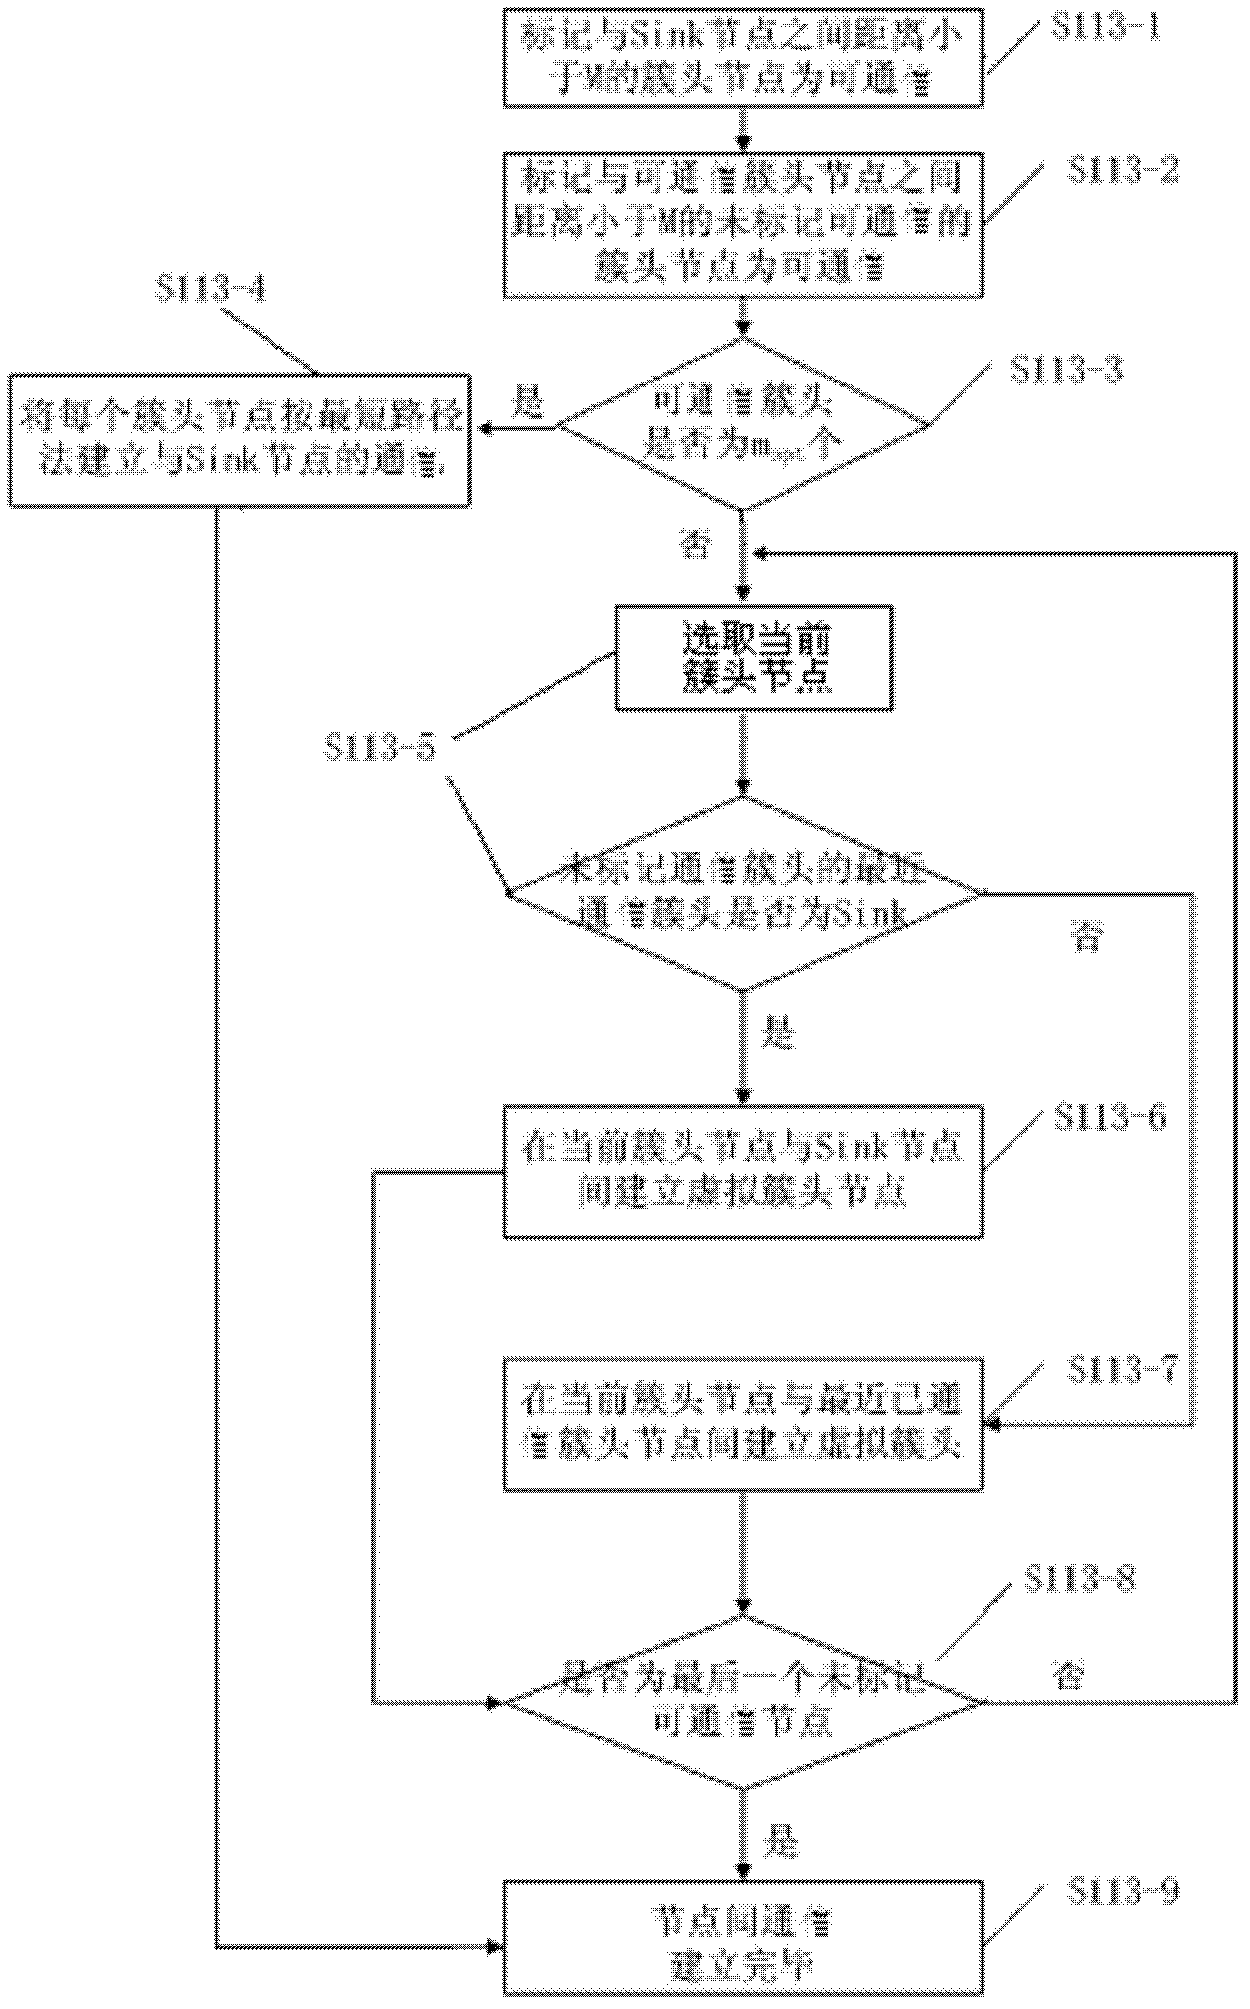 A routing method for bridge status monitoring based on wireless sensor network